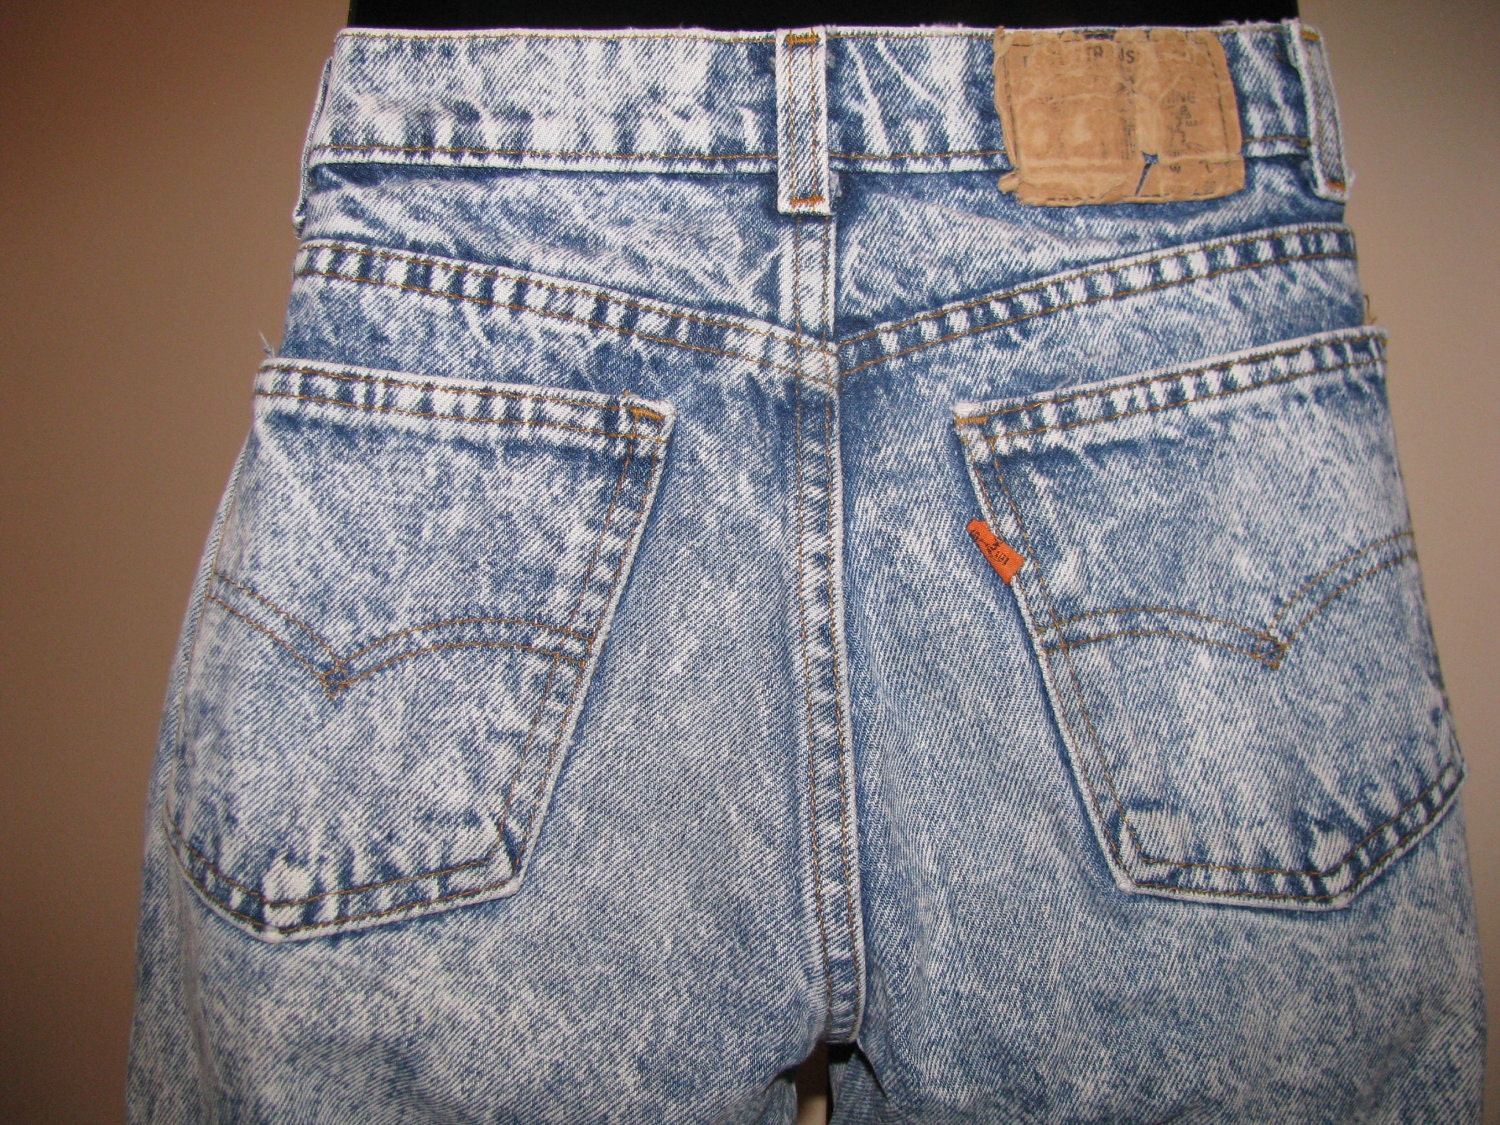 Vintage Levis Acid Washed Jeans 30 waist 29 inseam